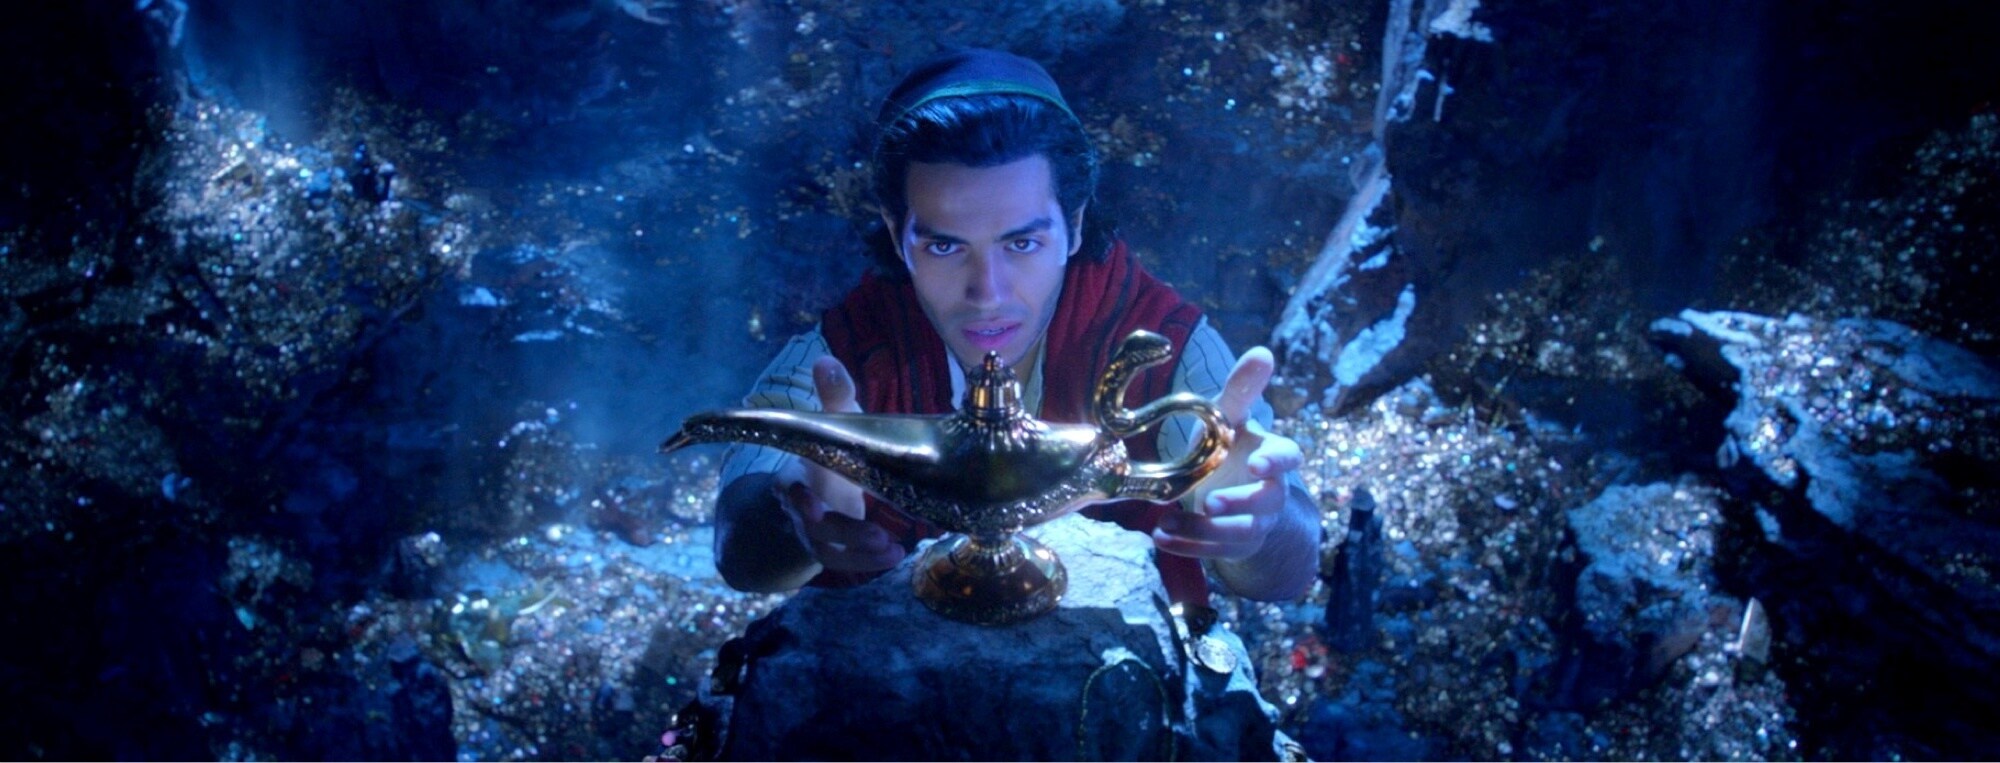 Aladdin afferra la lampada